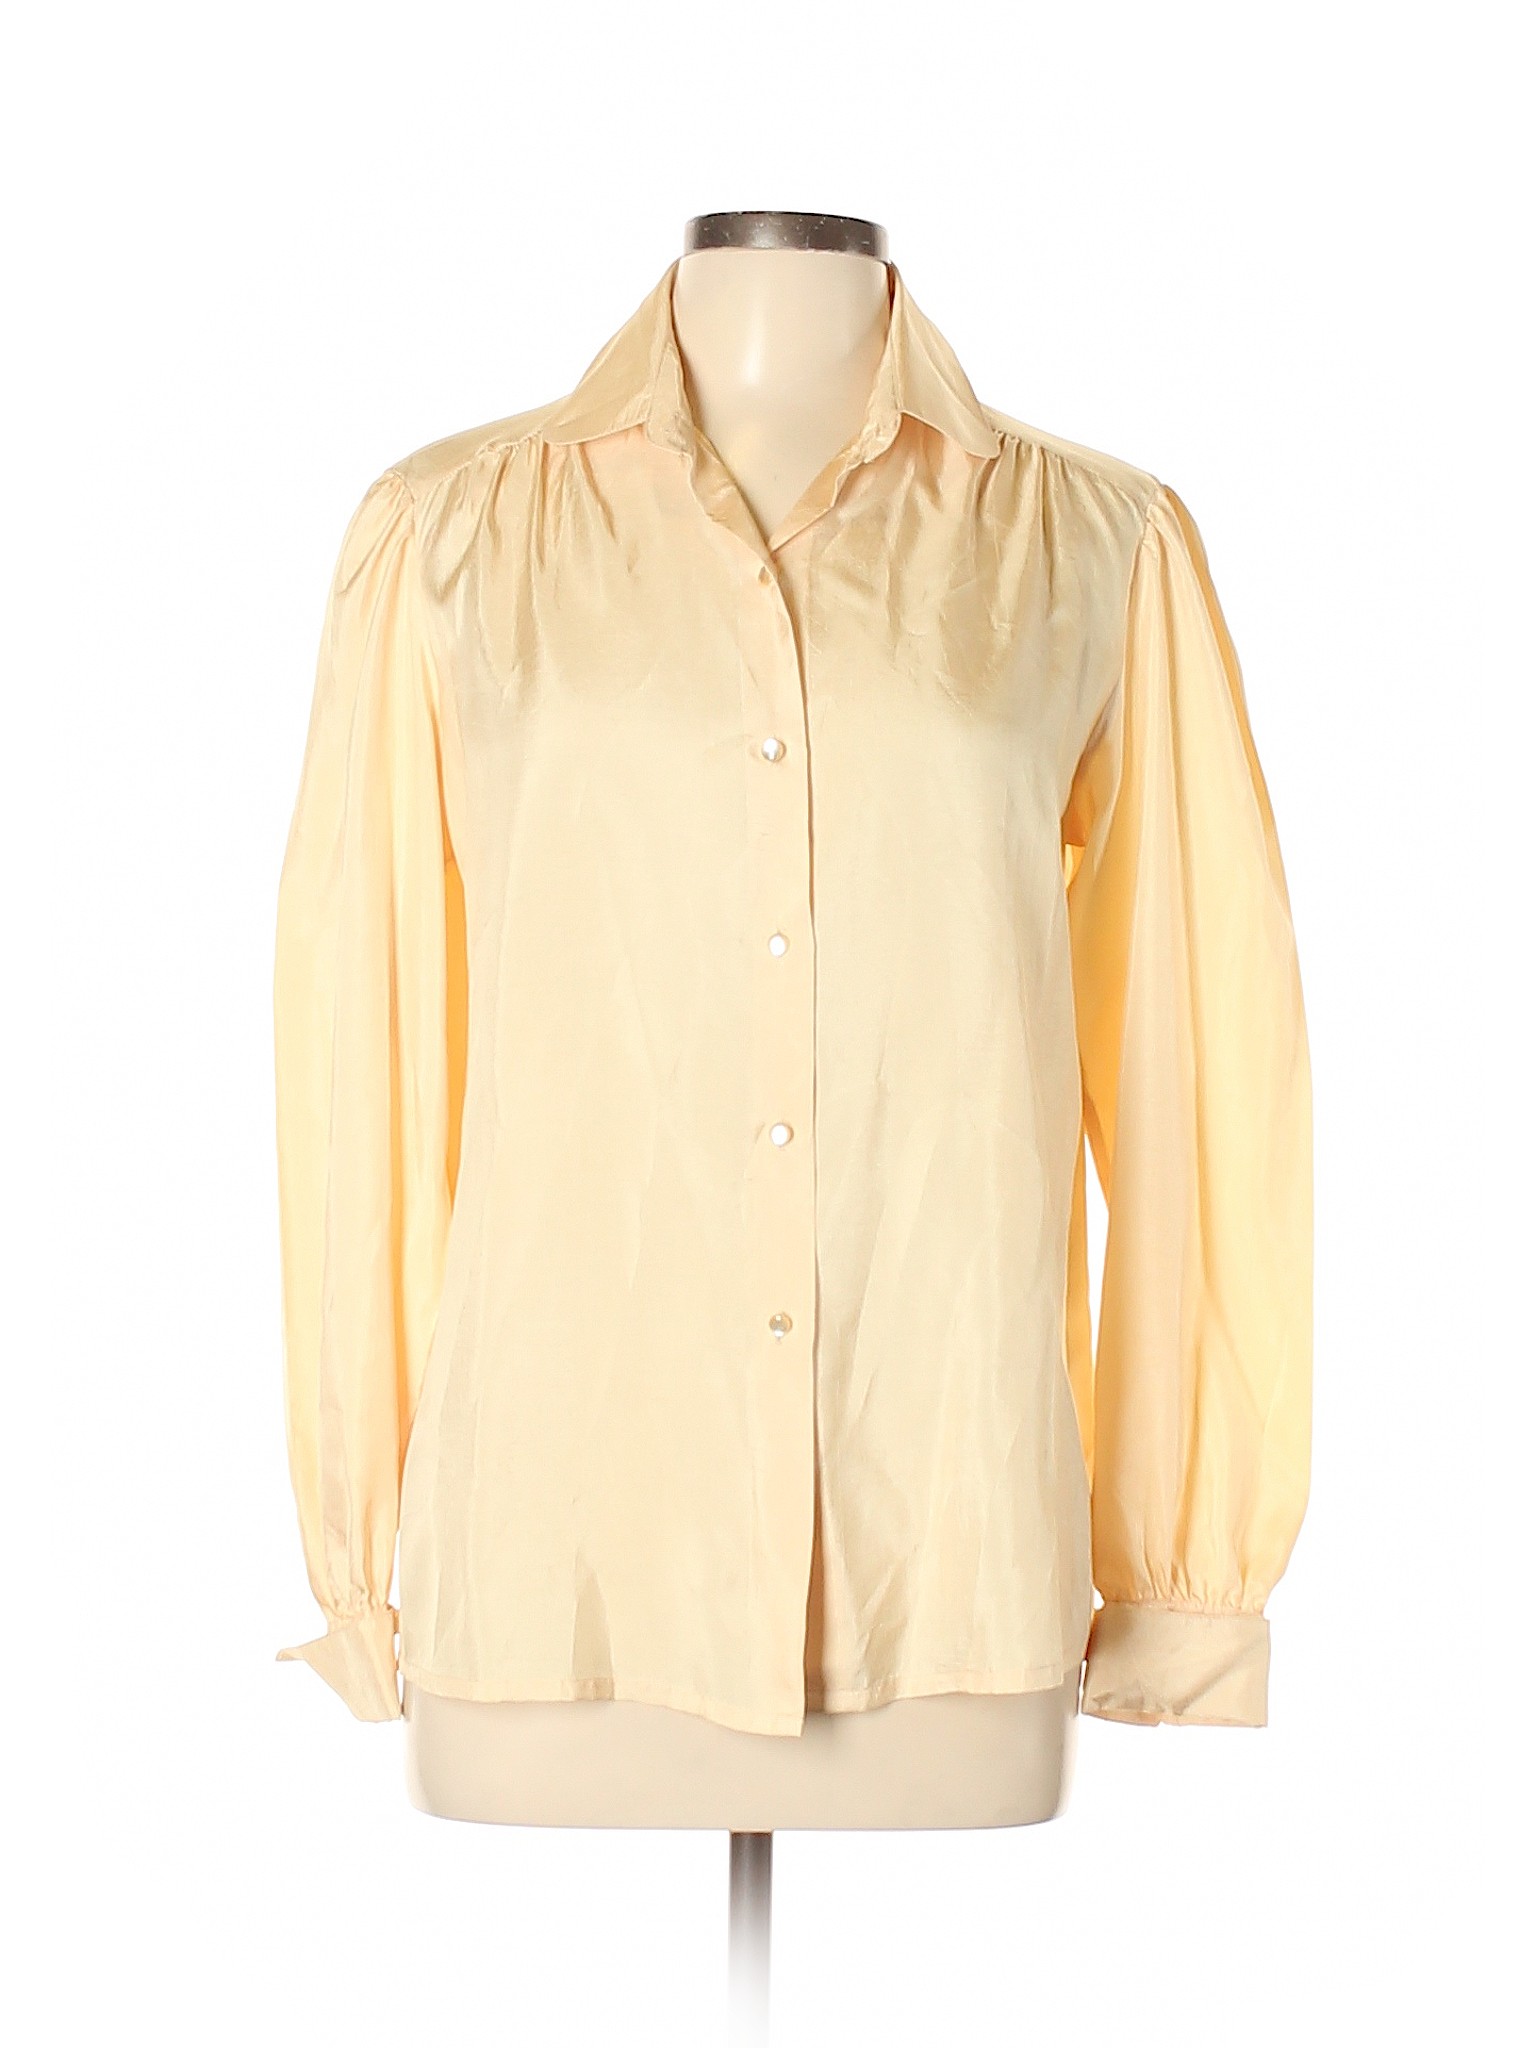 Susan Hutton Women Yellow Long Sleeve Blouse 14 | eBay